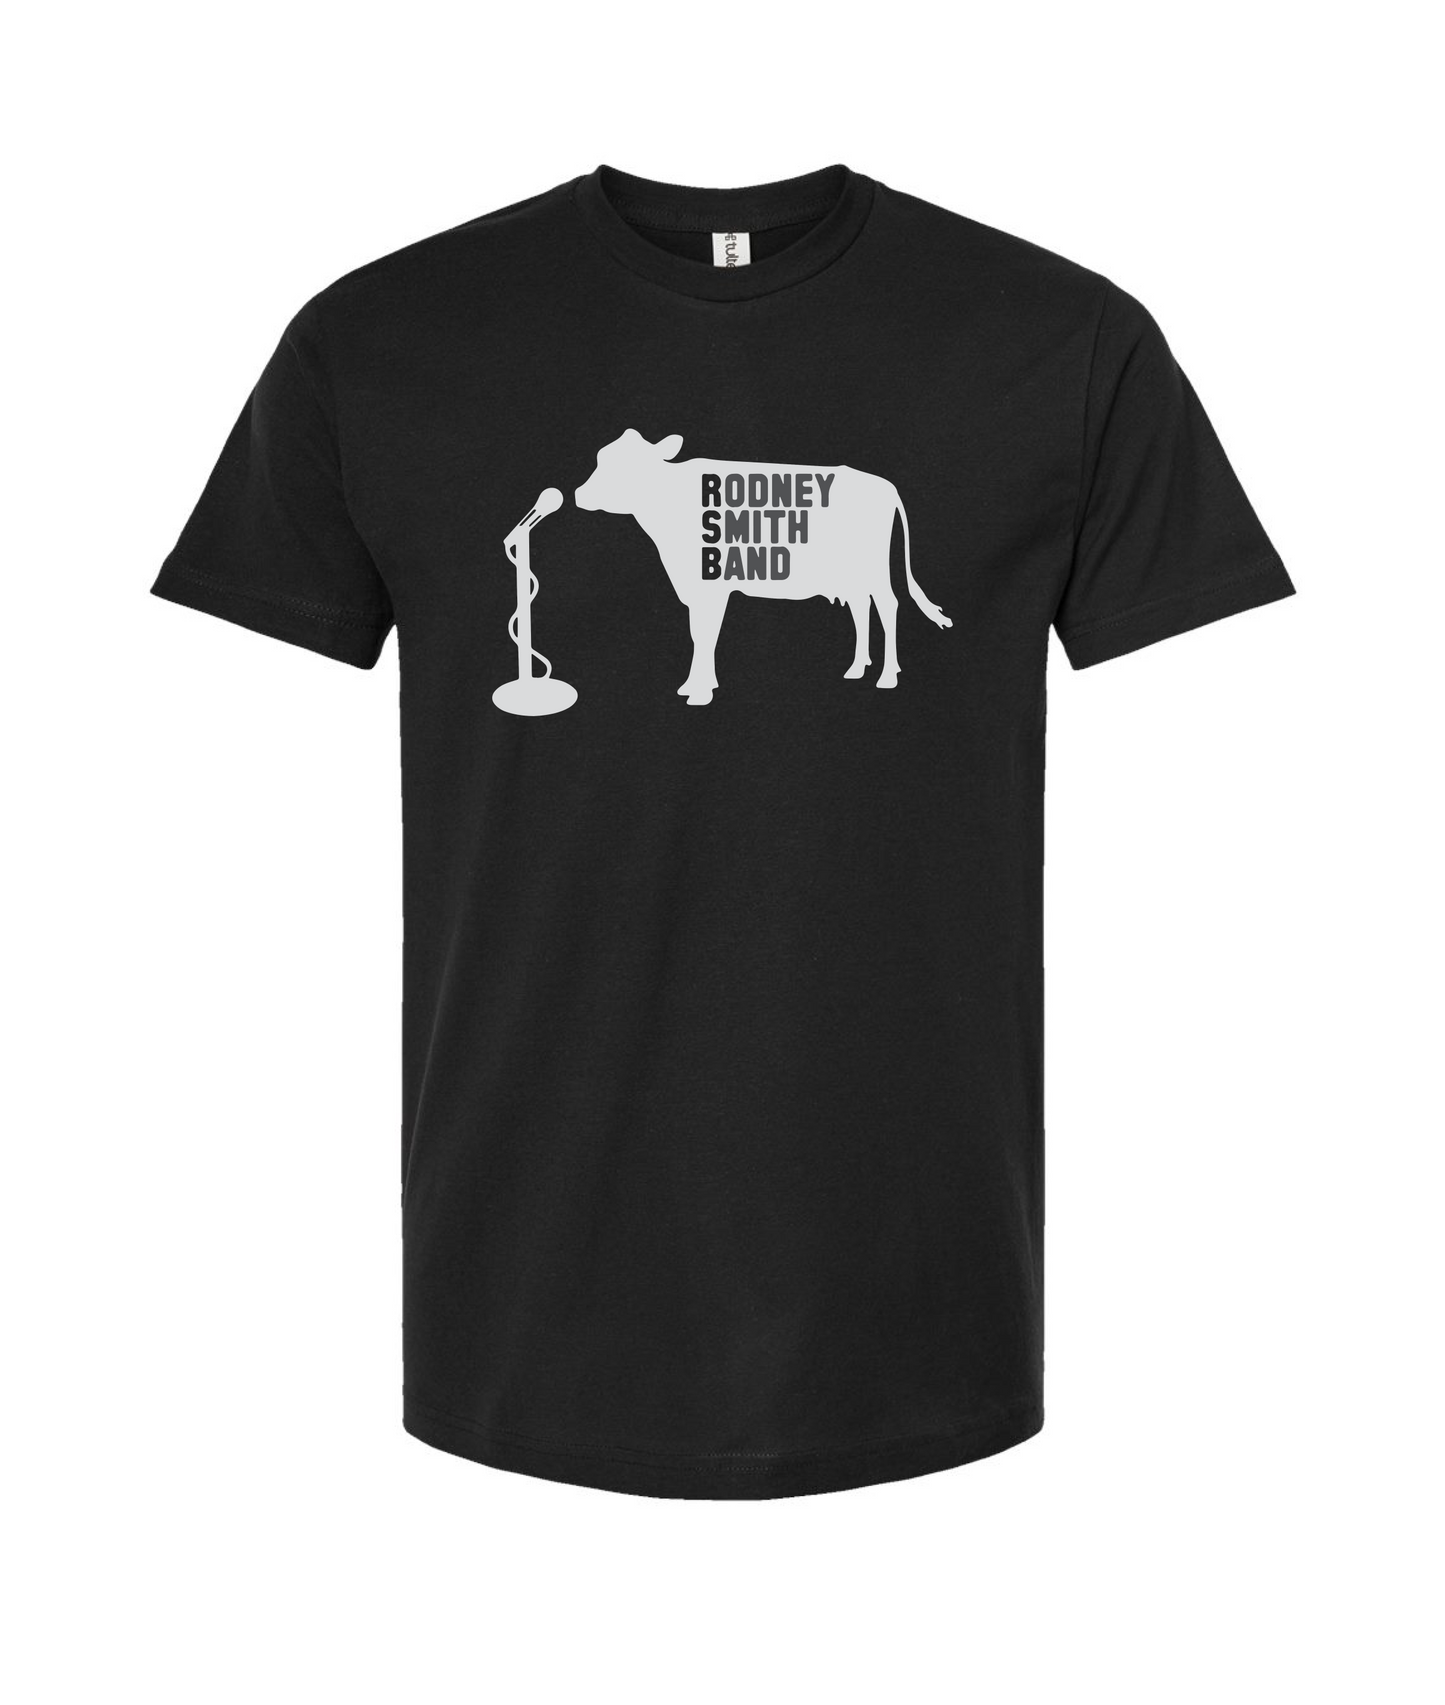 Rodney Smith Band - Cow Logo - Black T-Shirt